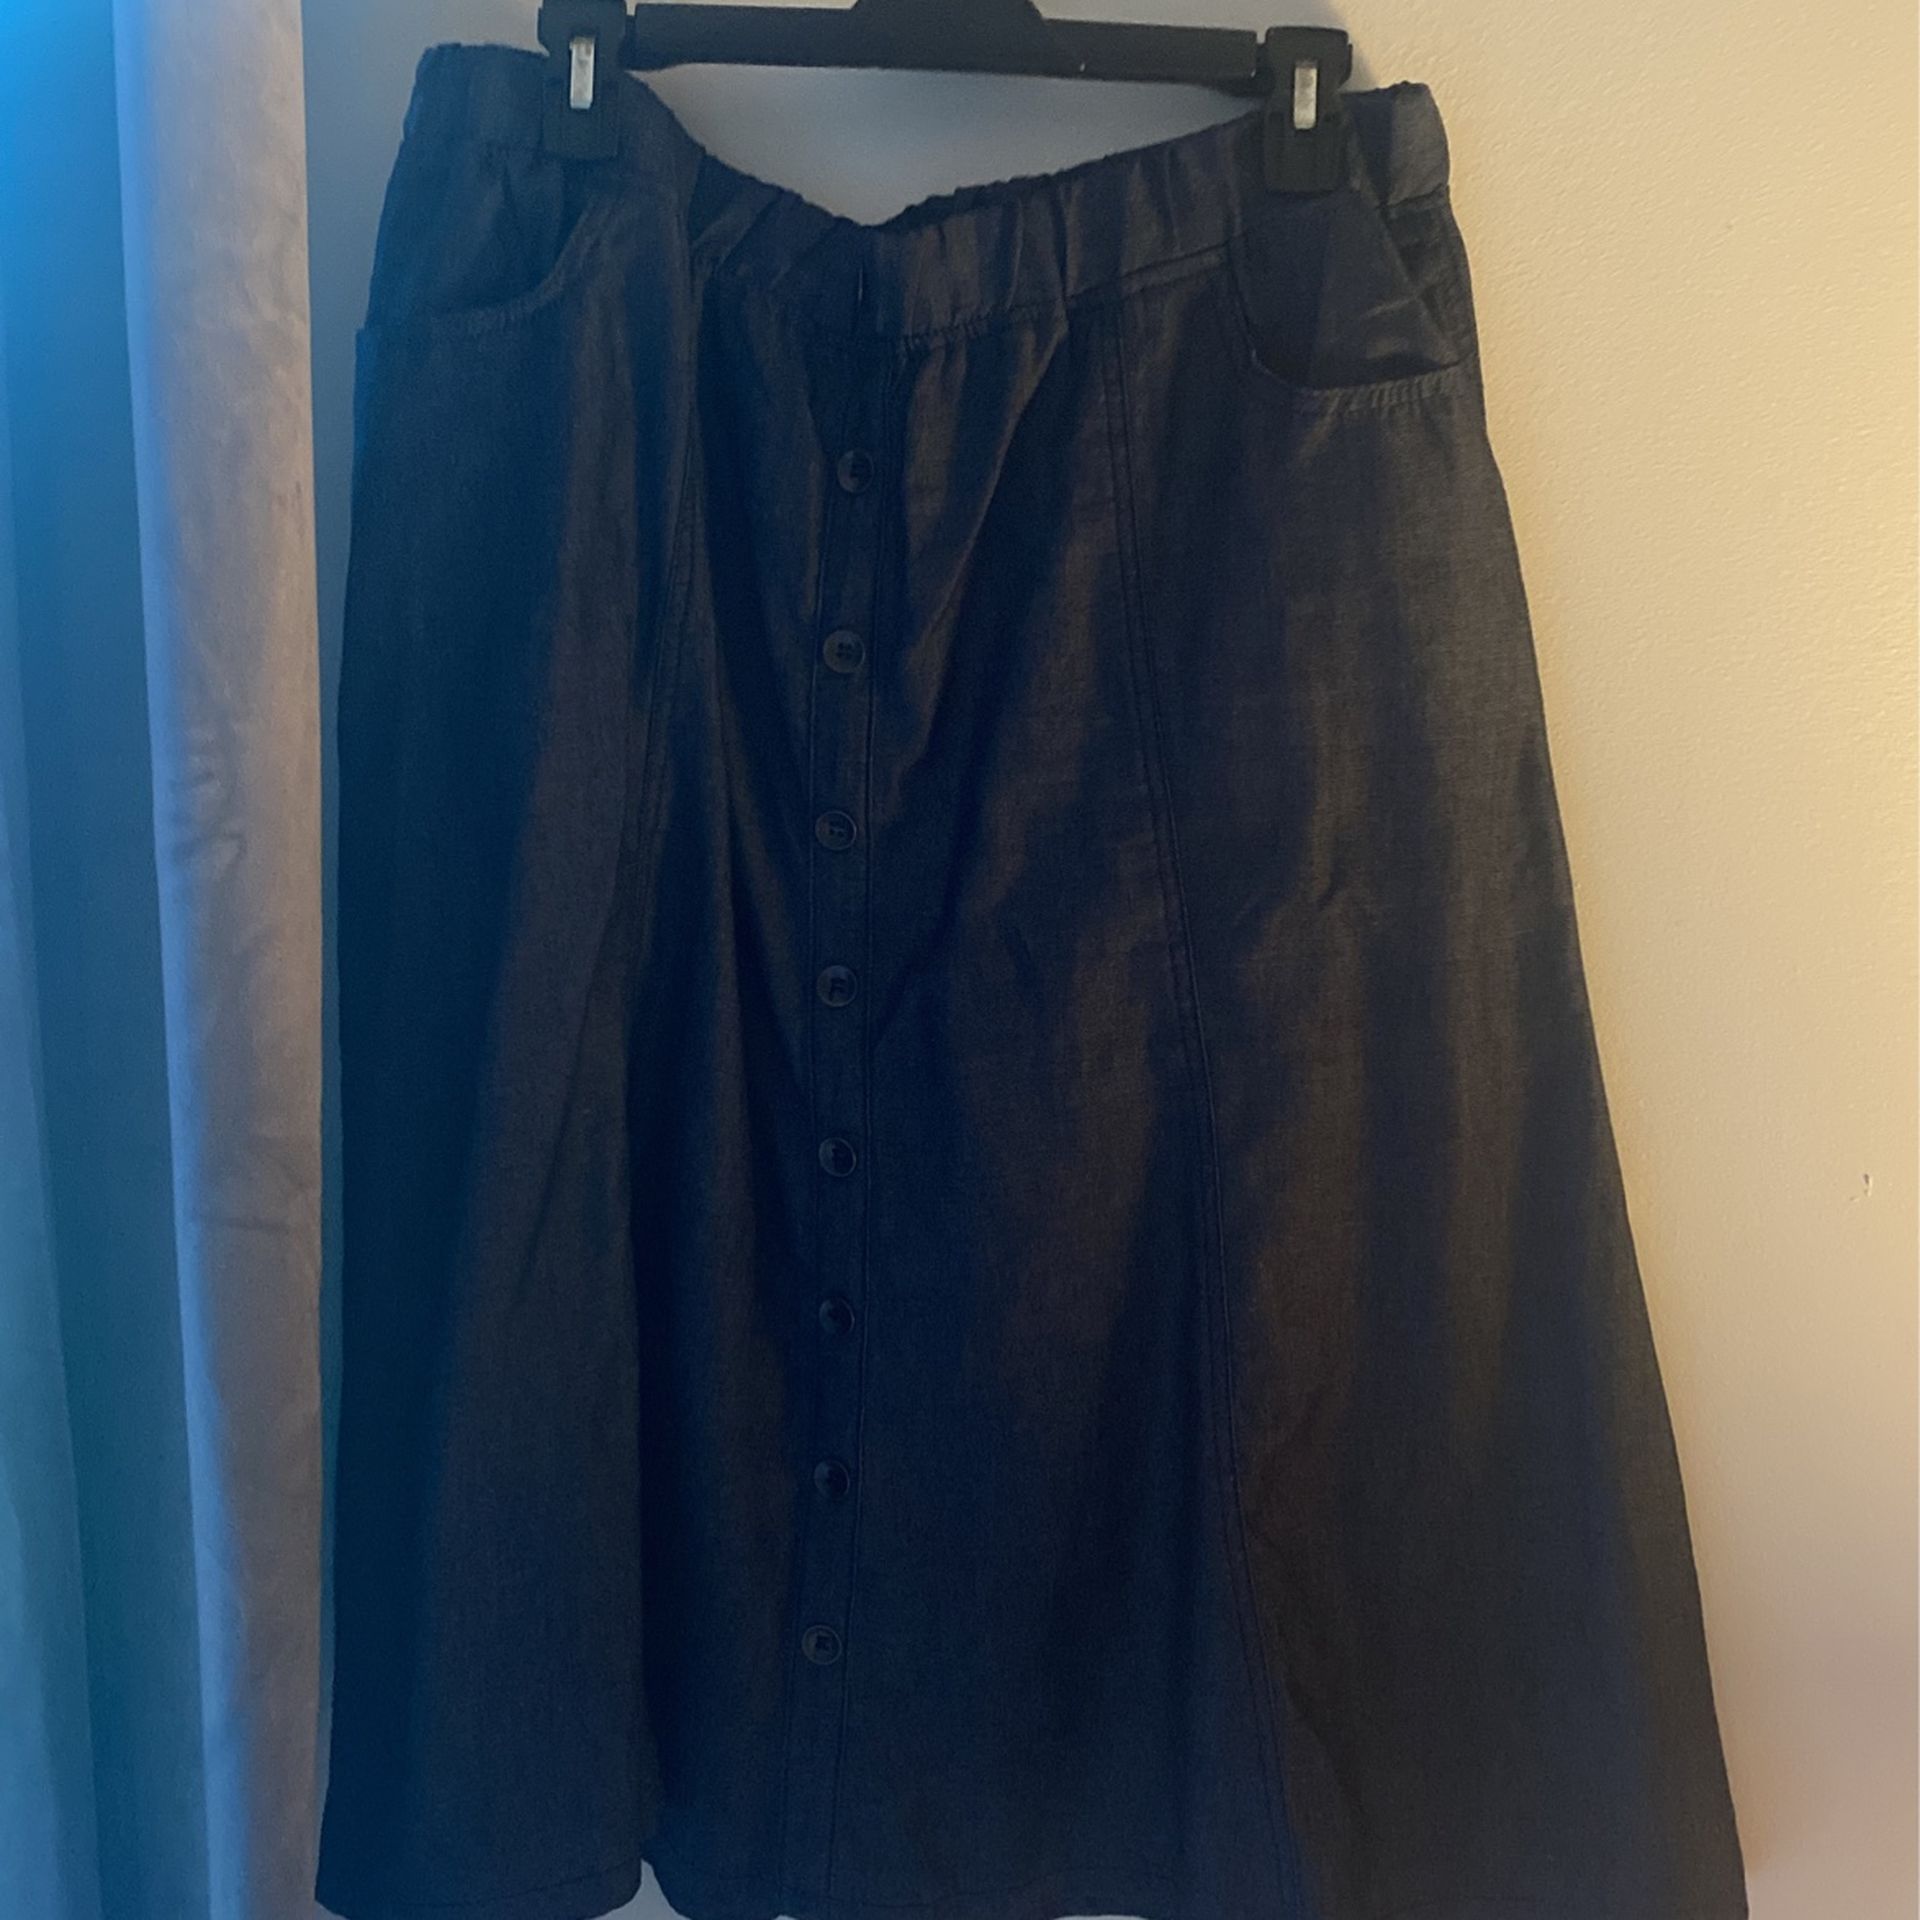 Jean Skirt With Botton Size L/xl 